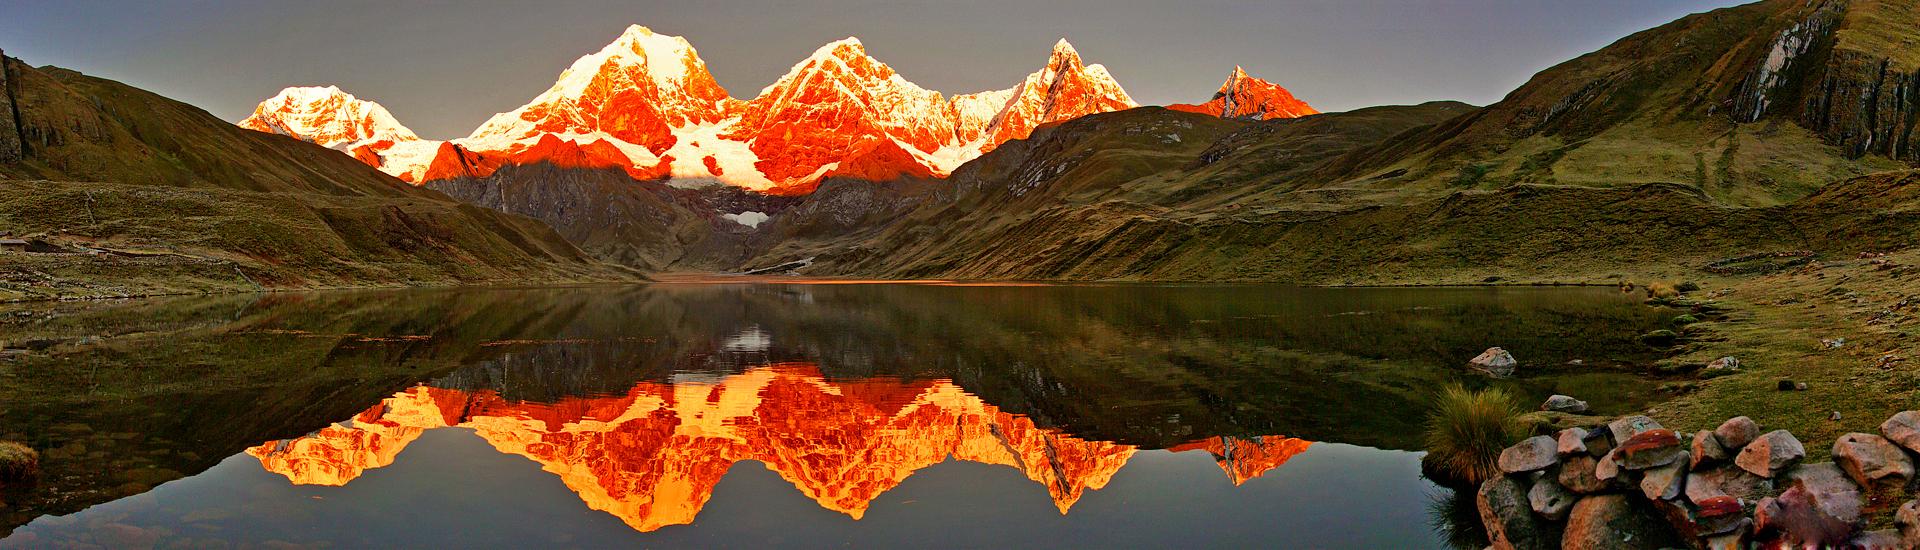 Cordillera Blanca i Cordillera Huayhuash – górski raj dla każdego